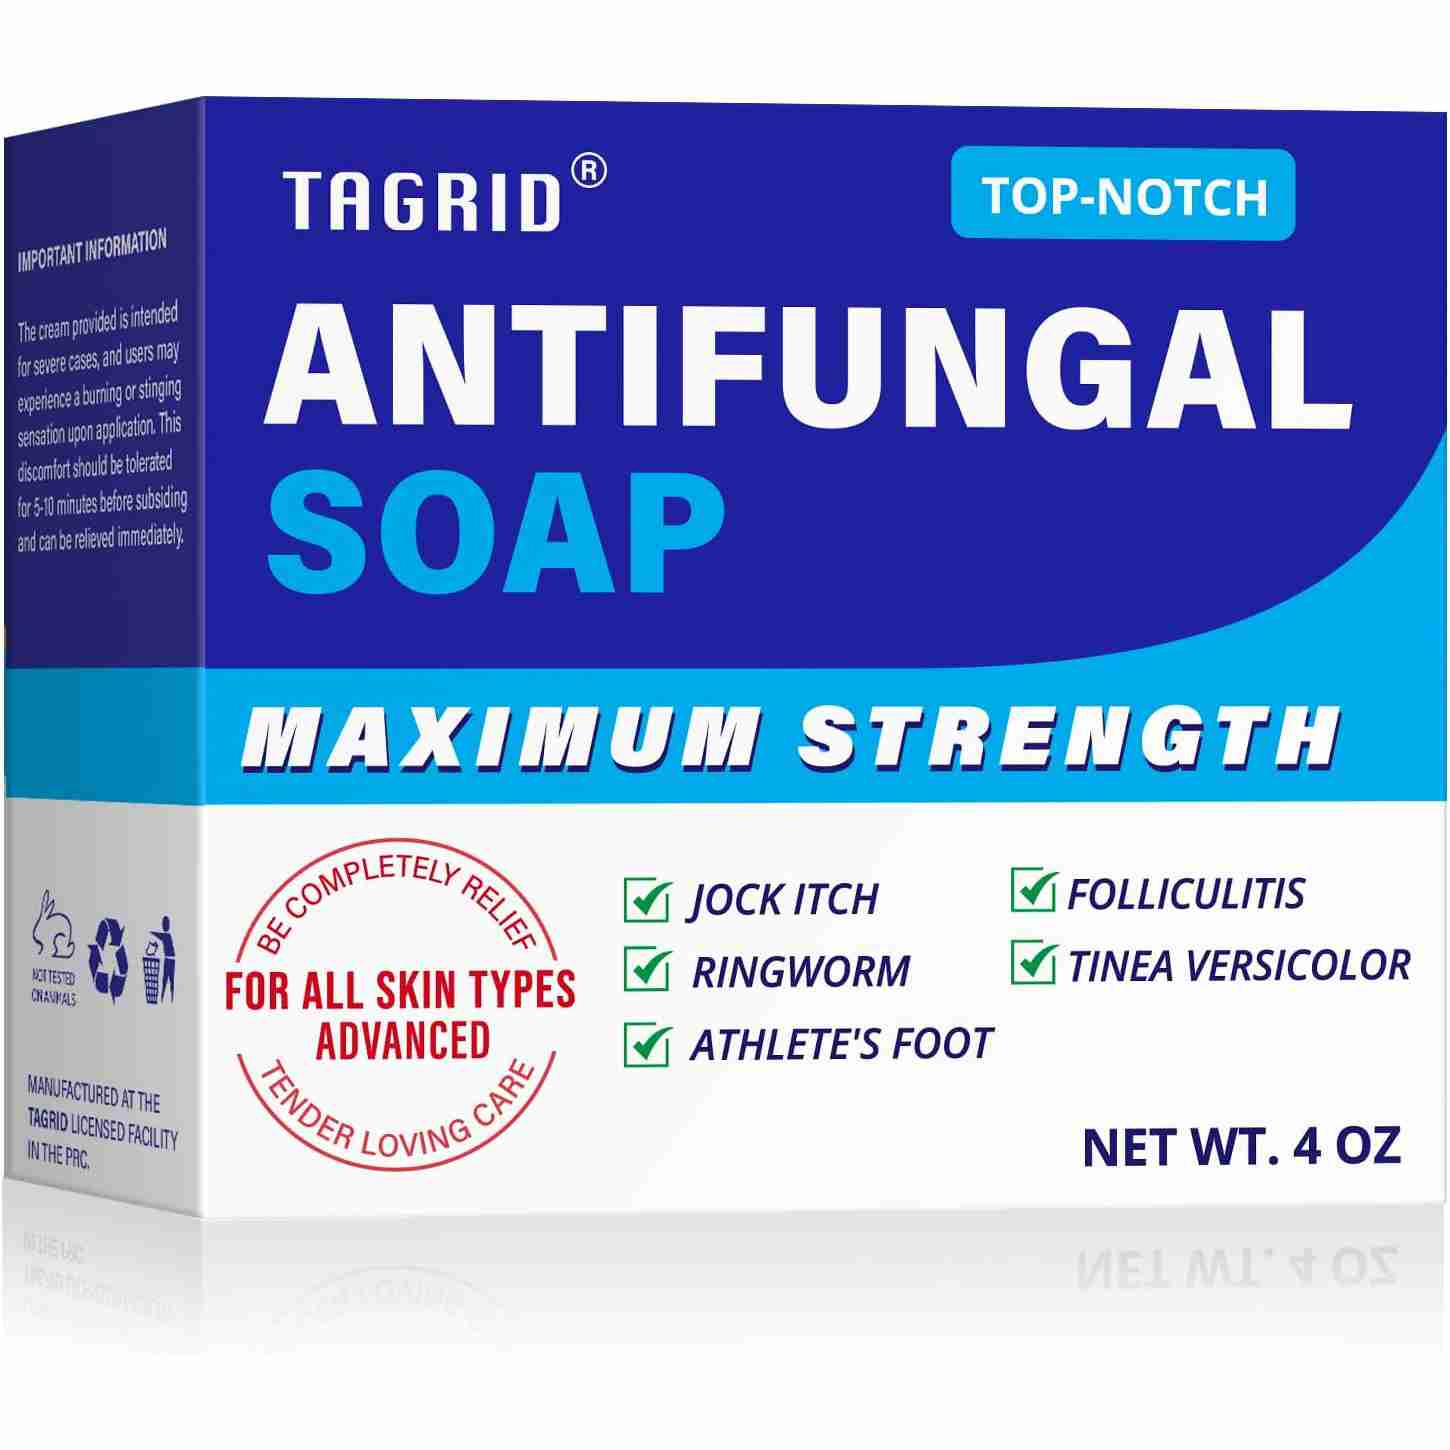 antifungal-soap-antibacterial-treatment-for-body with cash back rebate